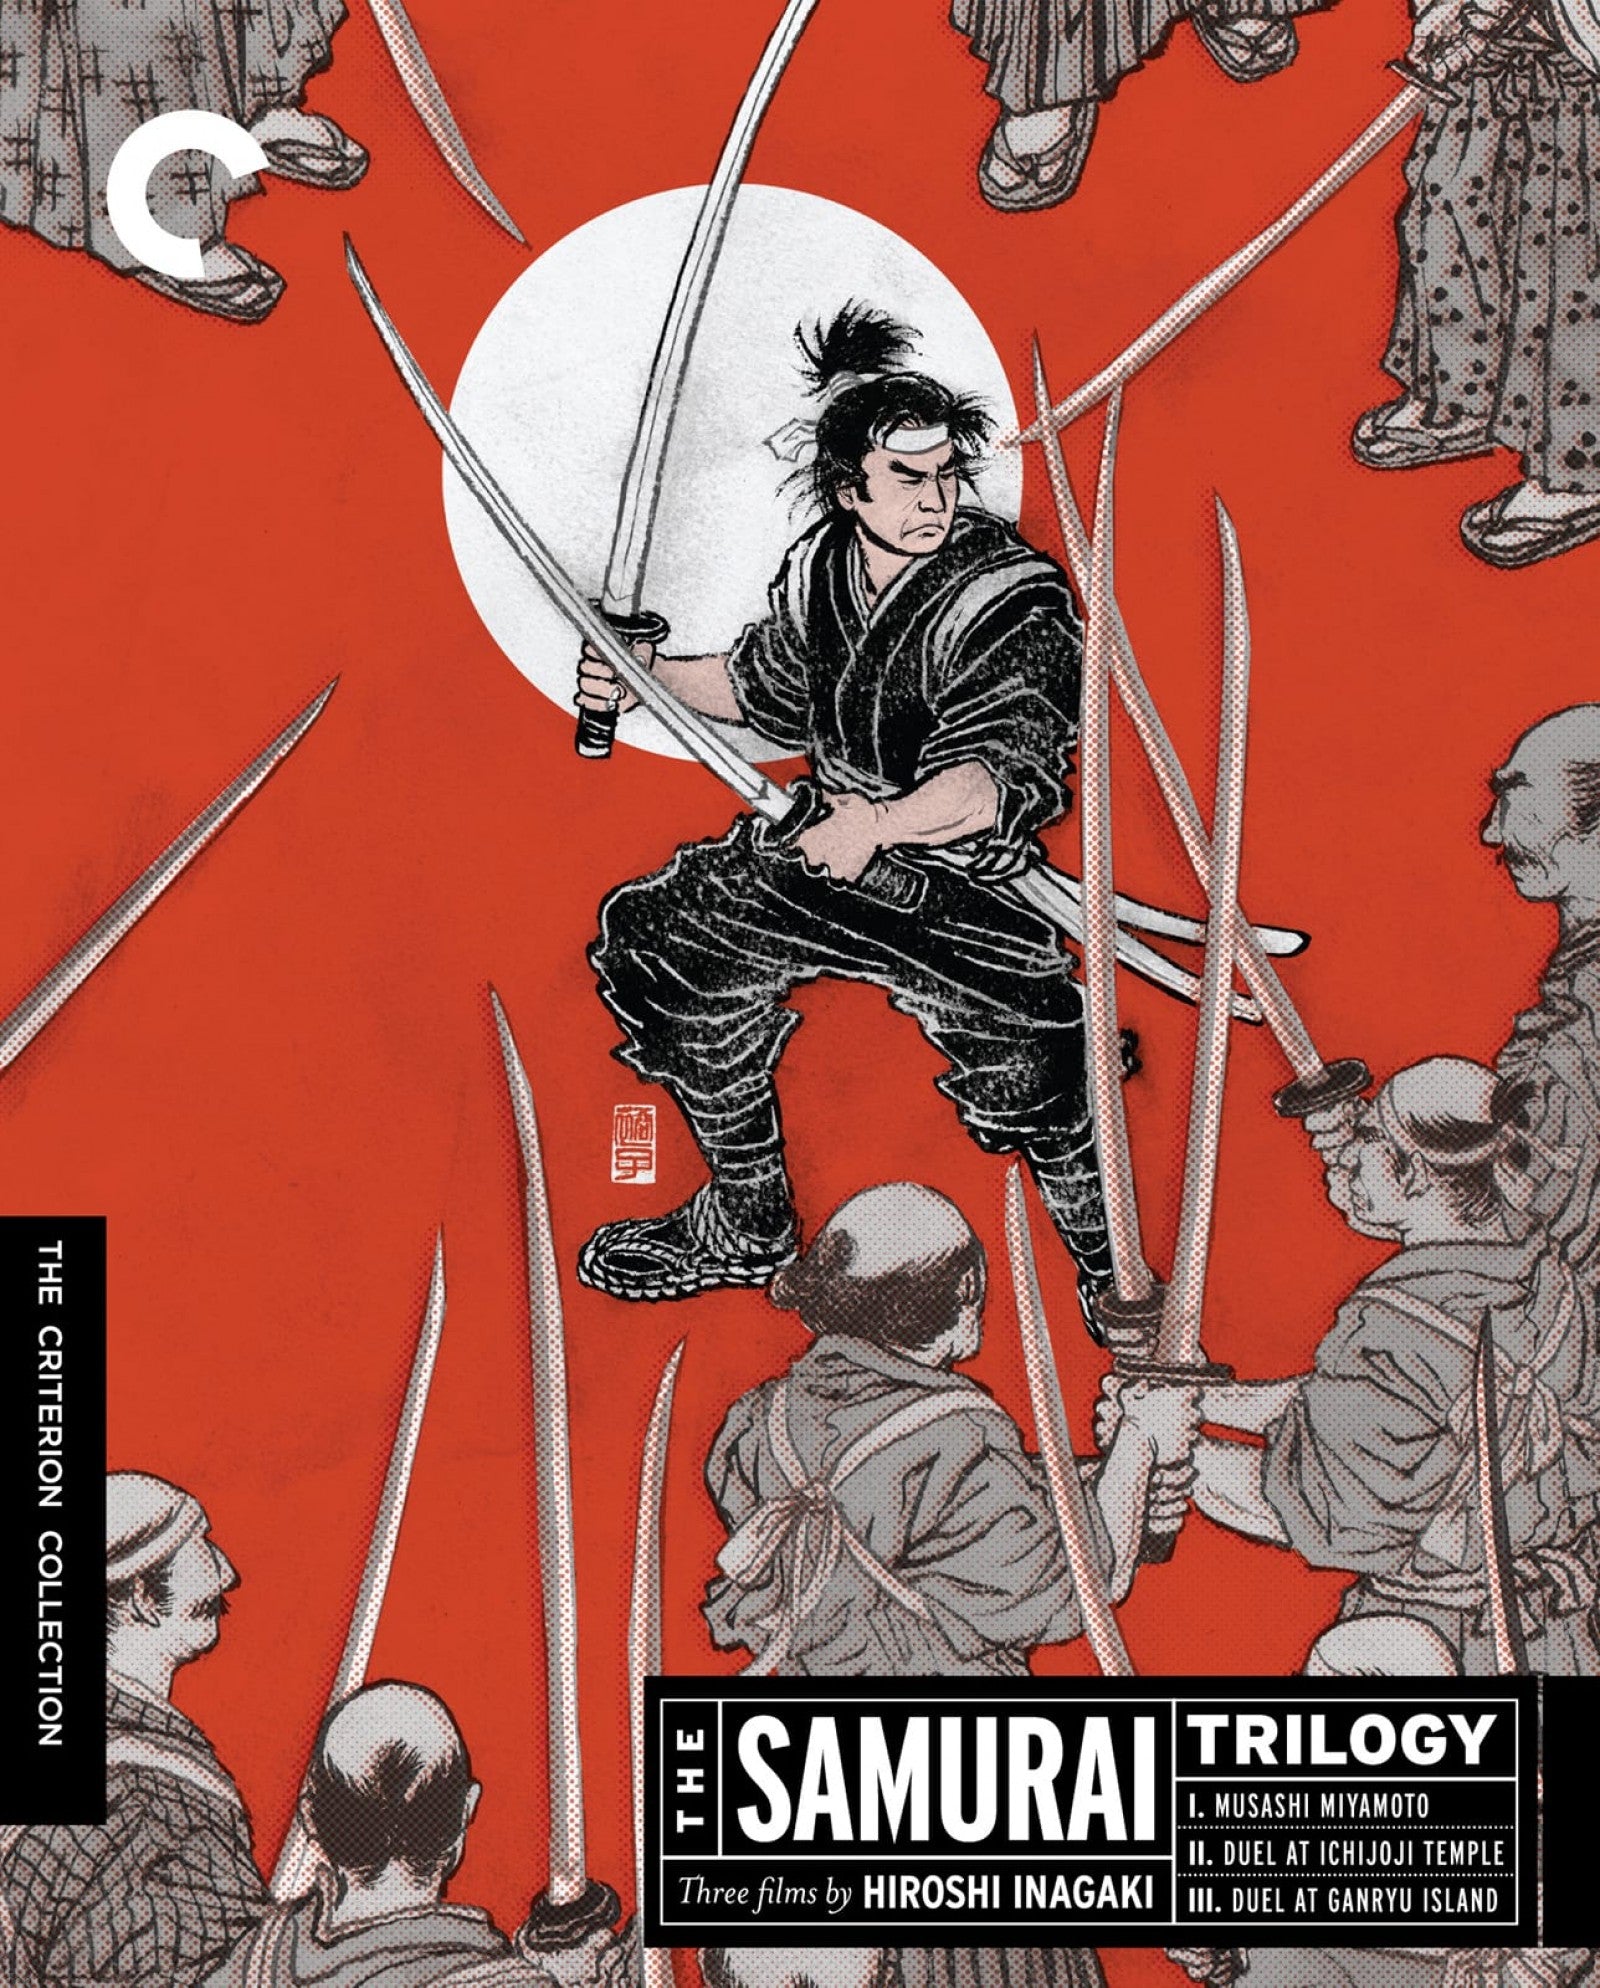 The Samurai Trilogy